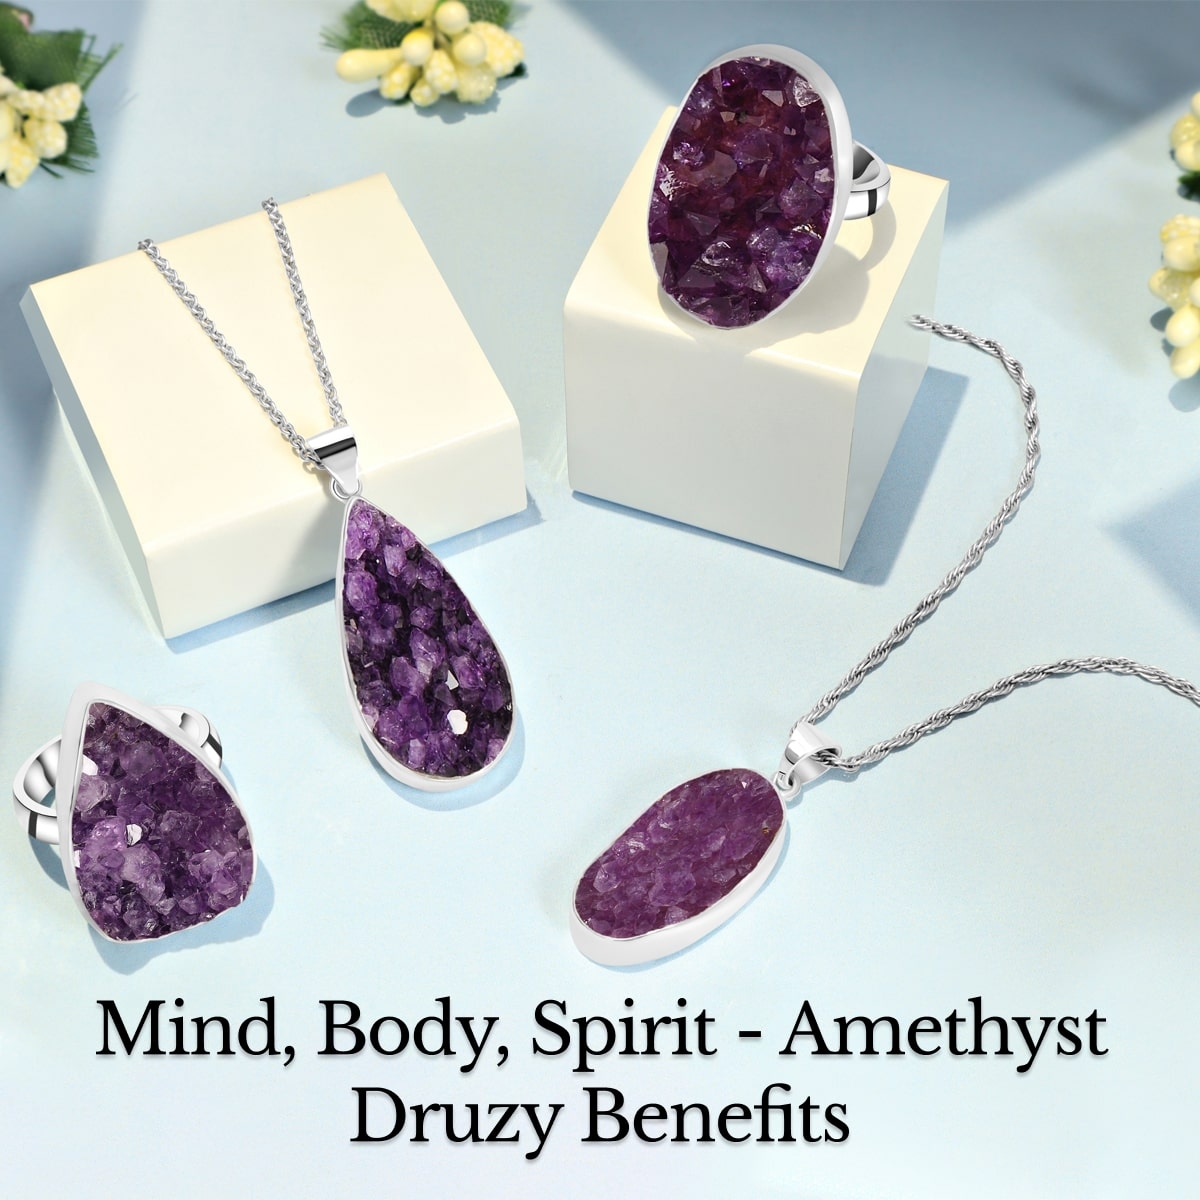 Amethyst Druzy Benefits for Mind, Body and Spirit